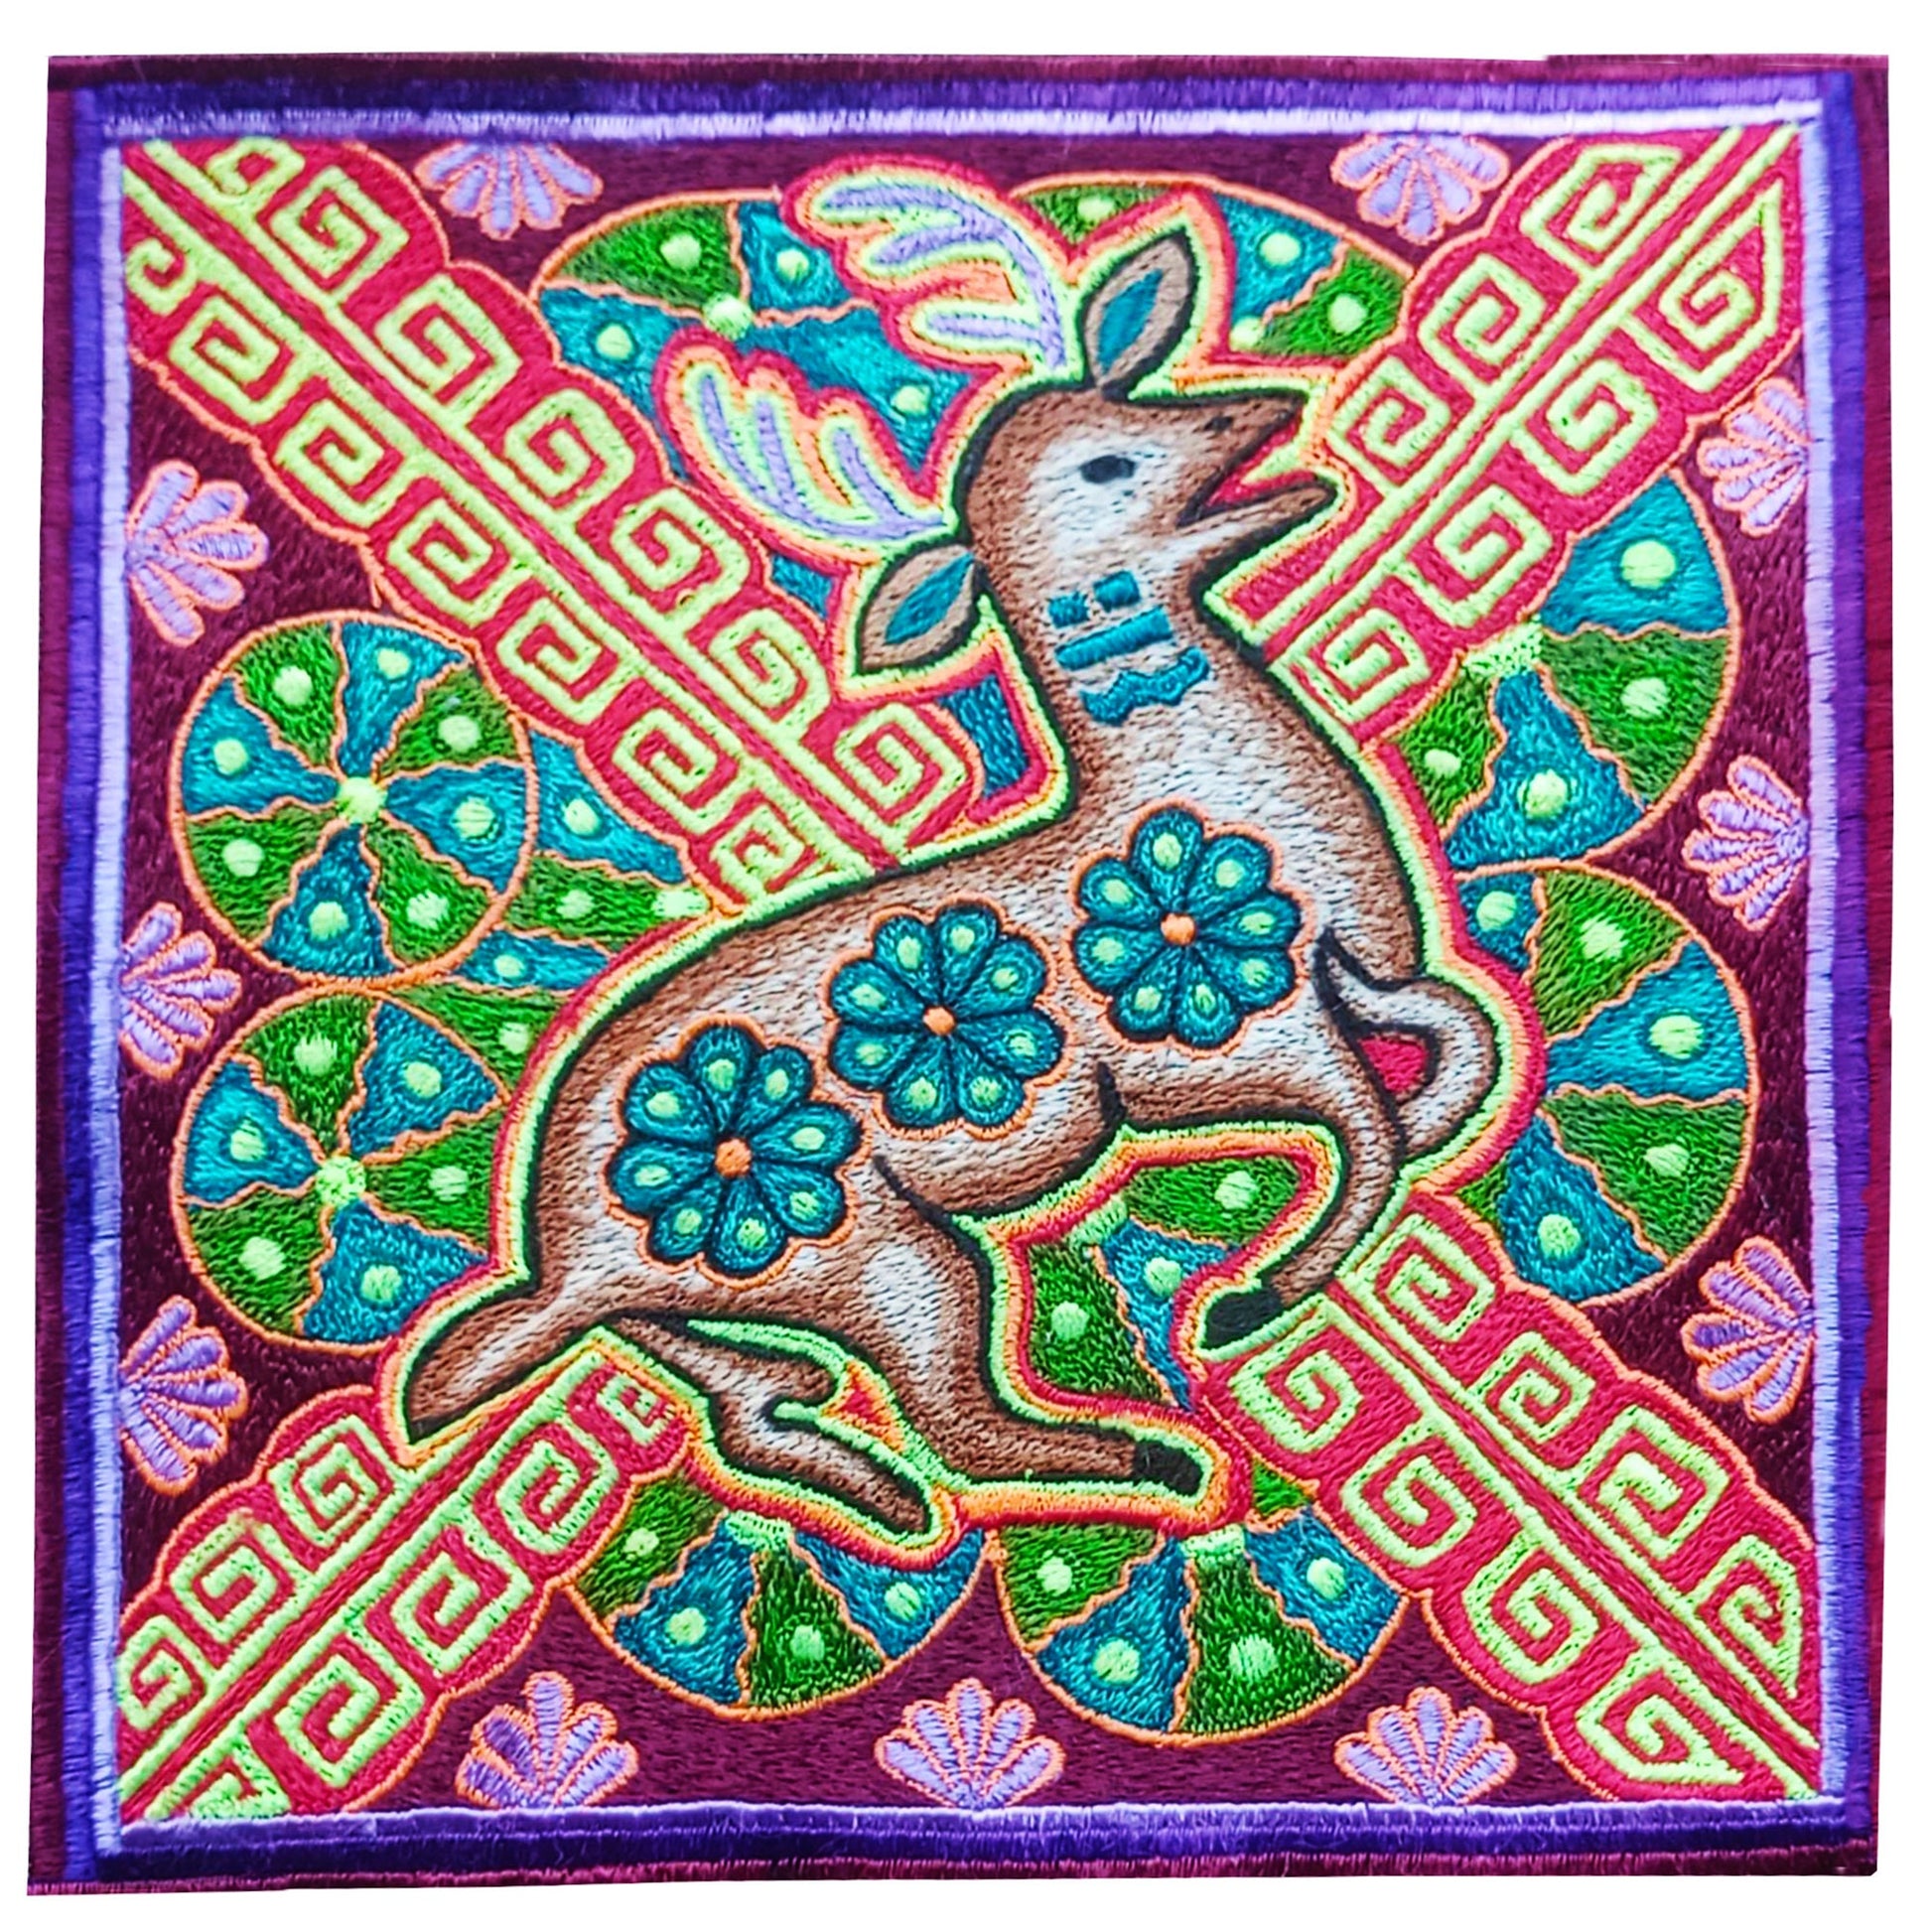 Huichol Magic Deer Peyote embroidery art shaman artwork mescaline blacklight glowing magic cactus indigene decoration UV active shining